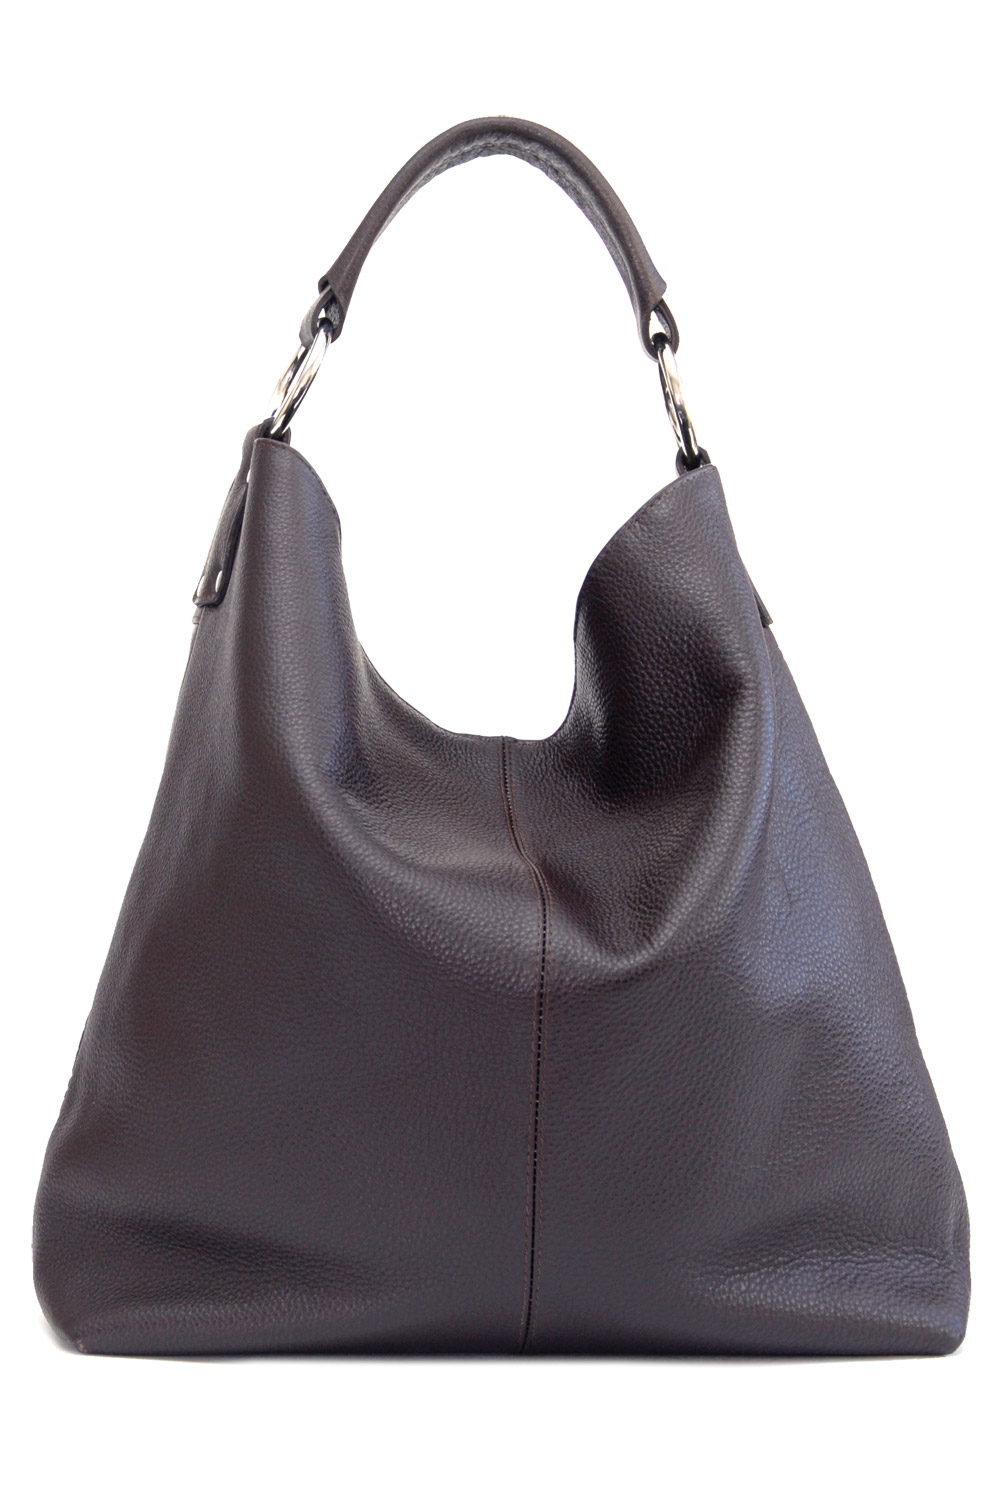 Australian Handmade Leather Handbags | Paul Smith